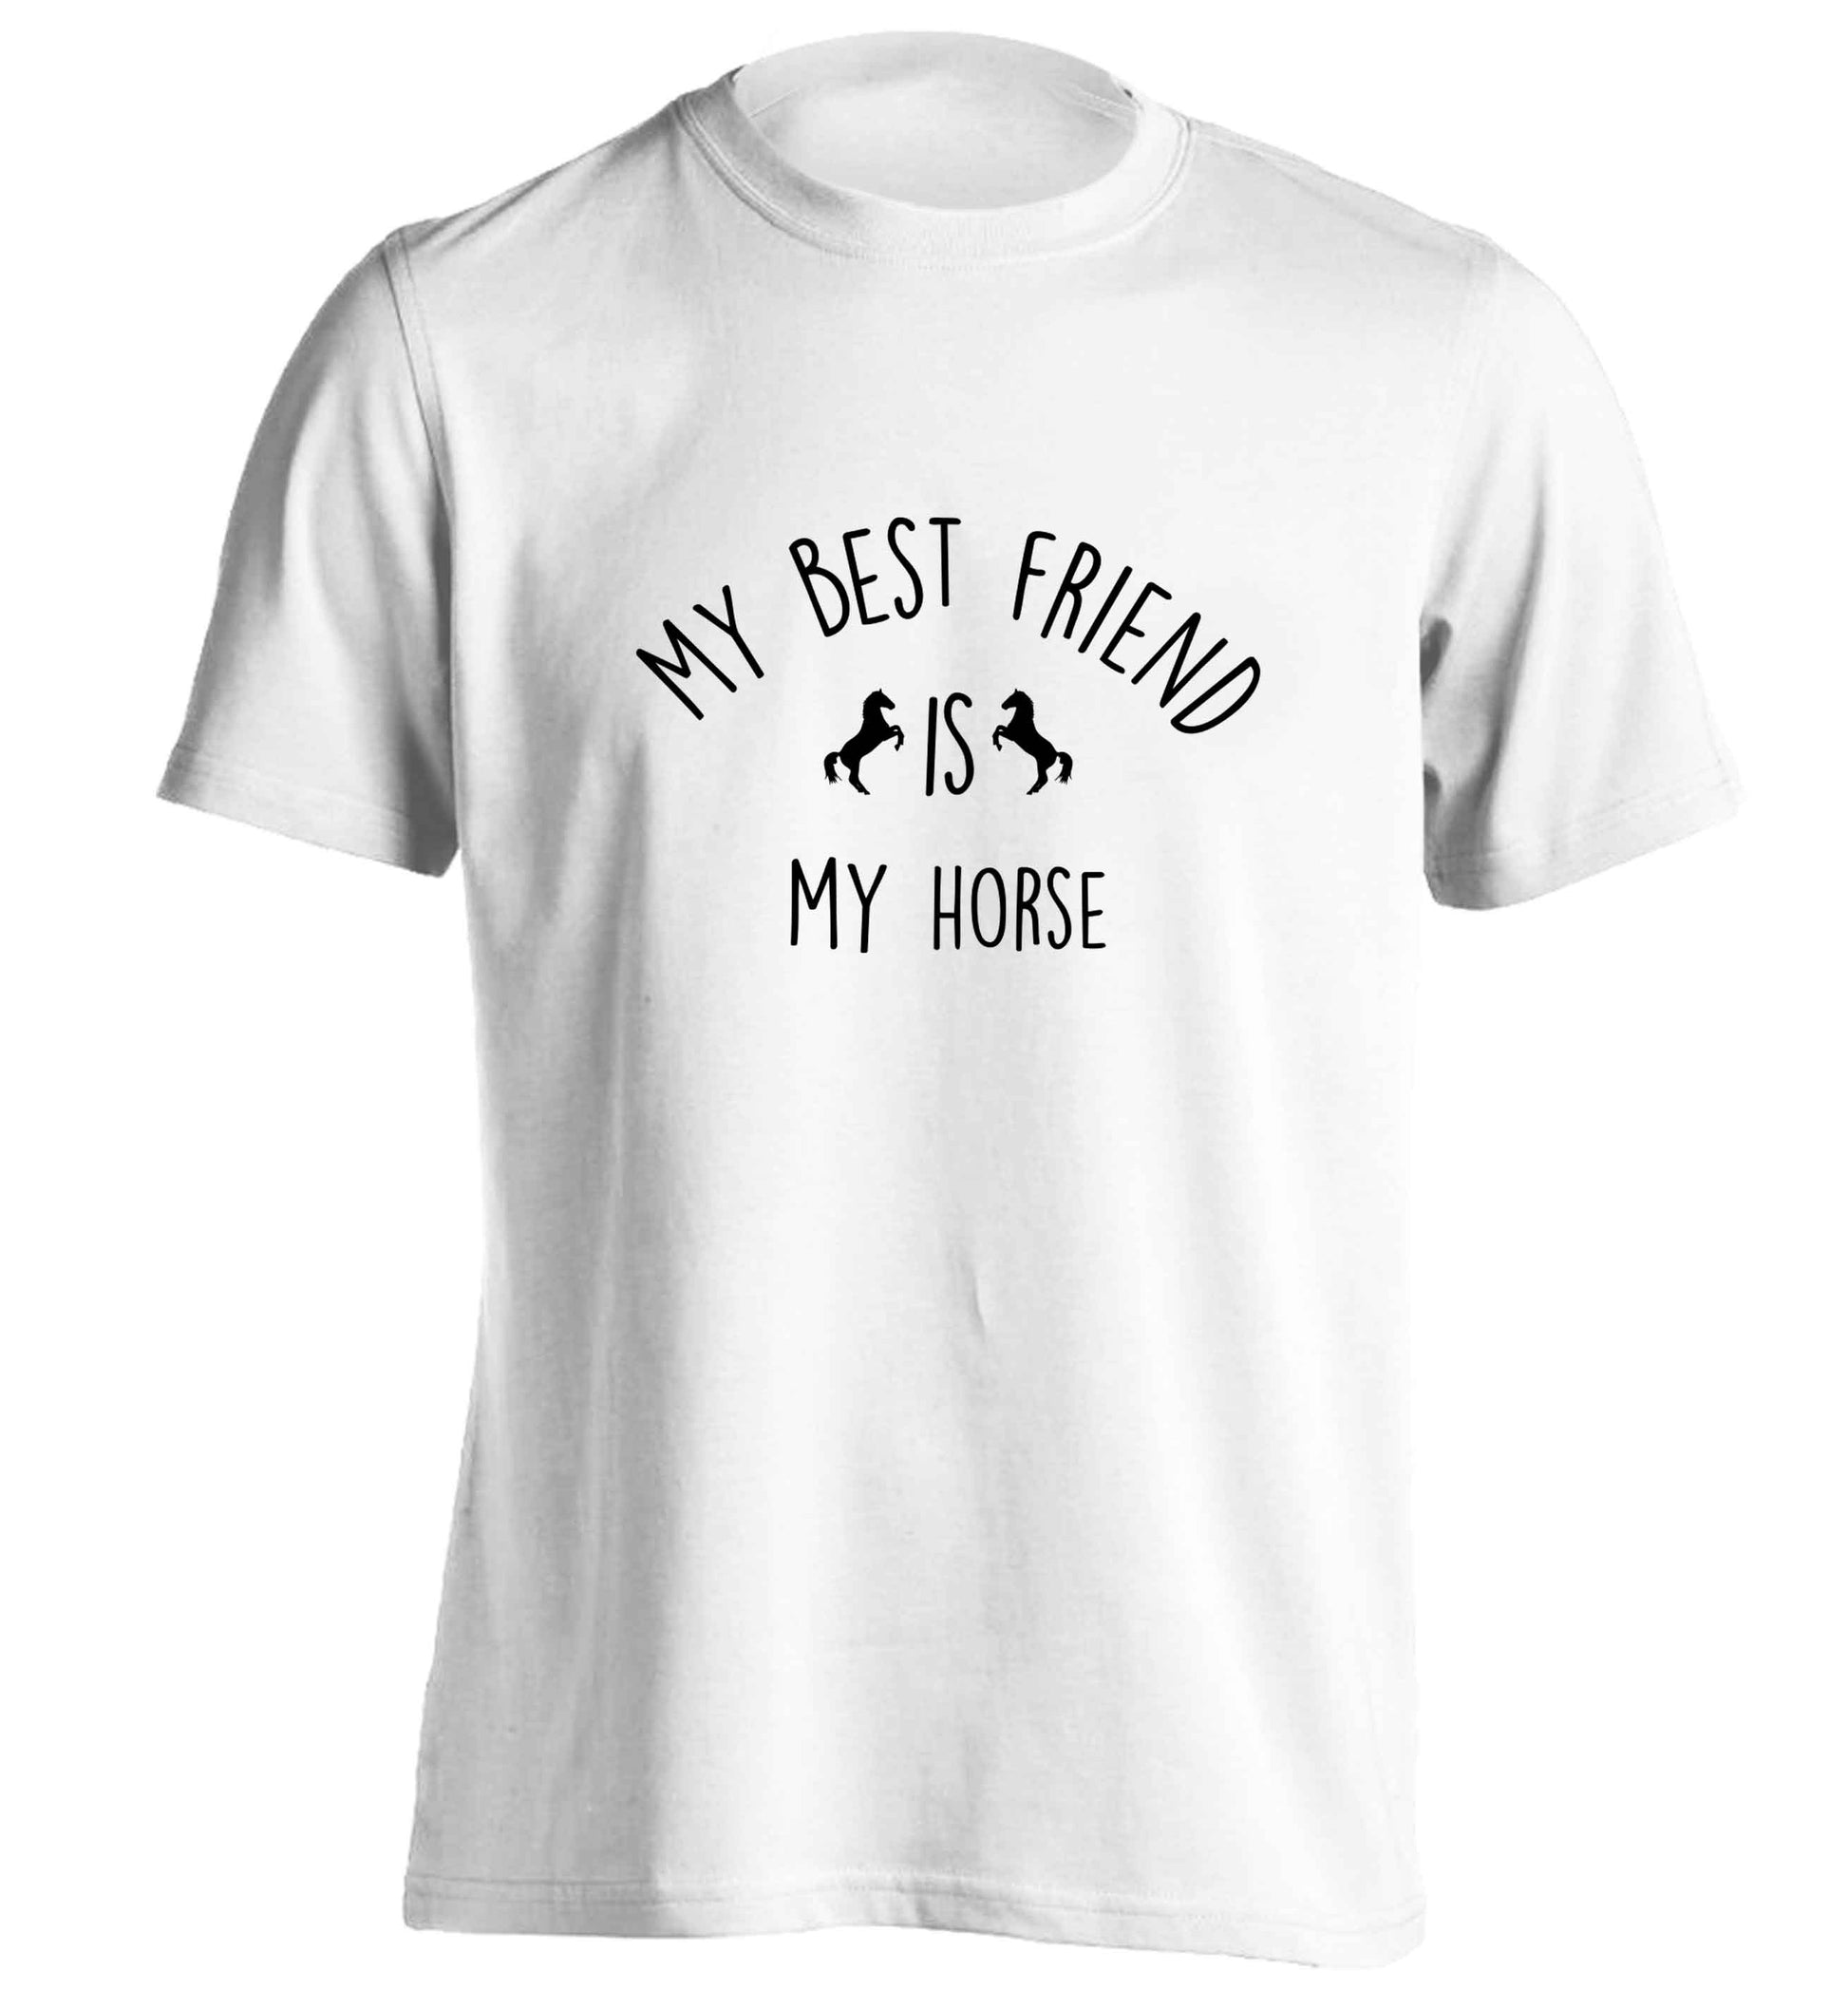 My best friend is my horse adults unisex white Tshirt 2XL